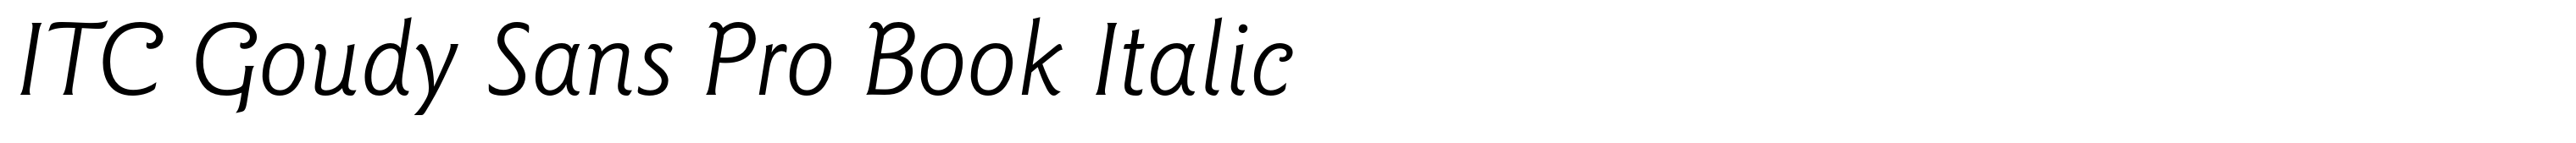 ITC Goudy Sans Pro Book Italic